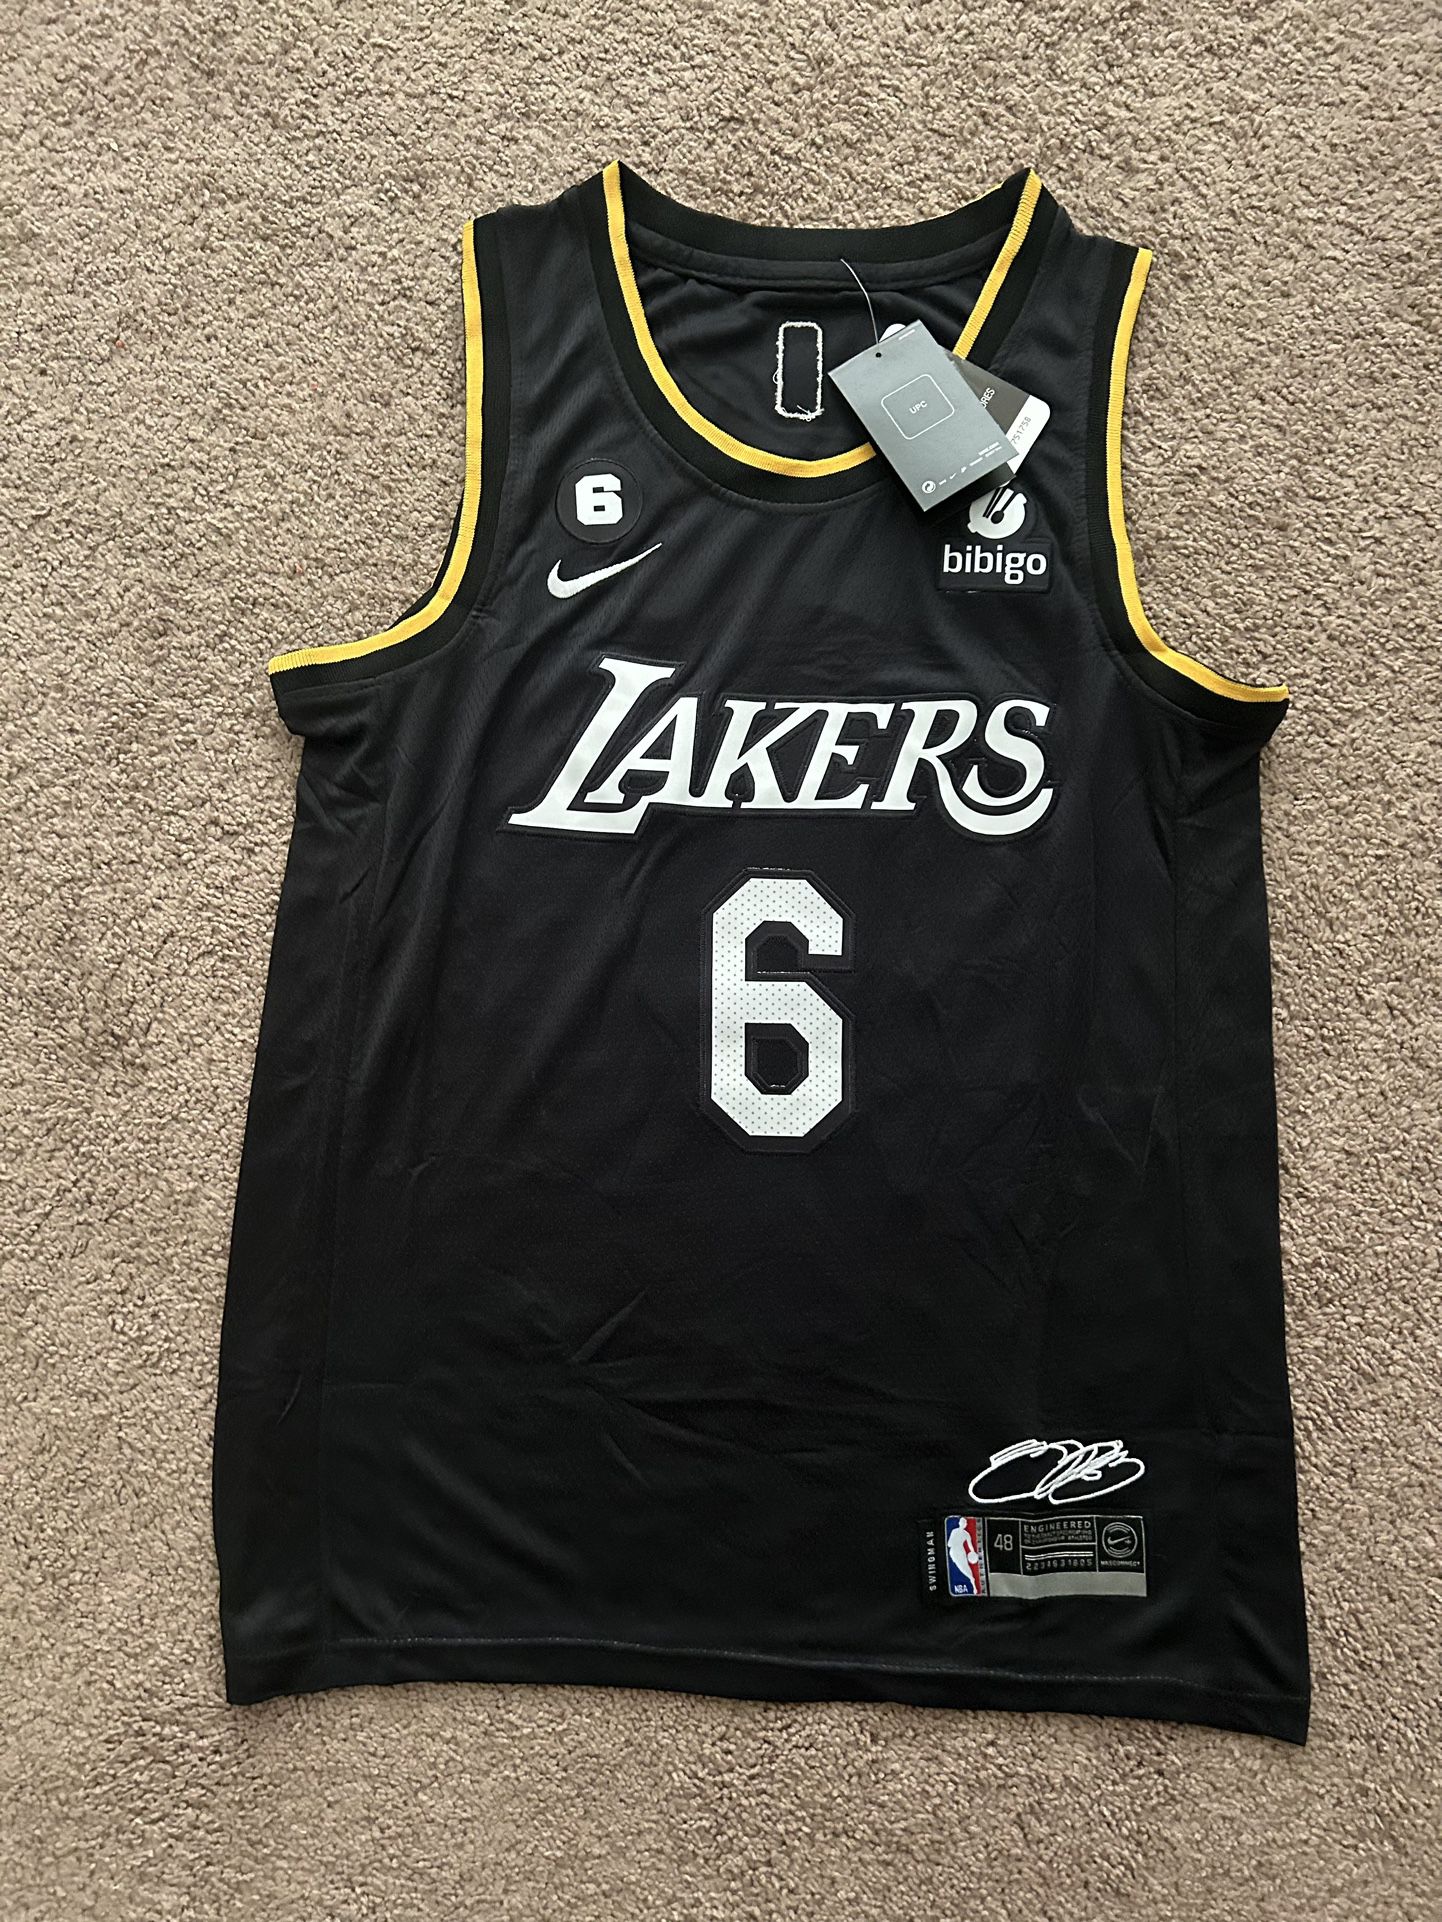 LeBron James Lakers Men's Nike Dri-FIT NBA Jersey Sz-48 for Sale in  Arlington, TX - OfferUp